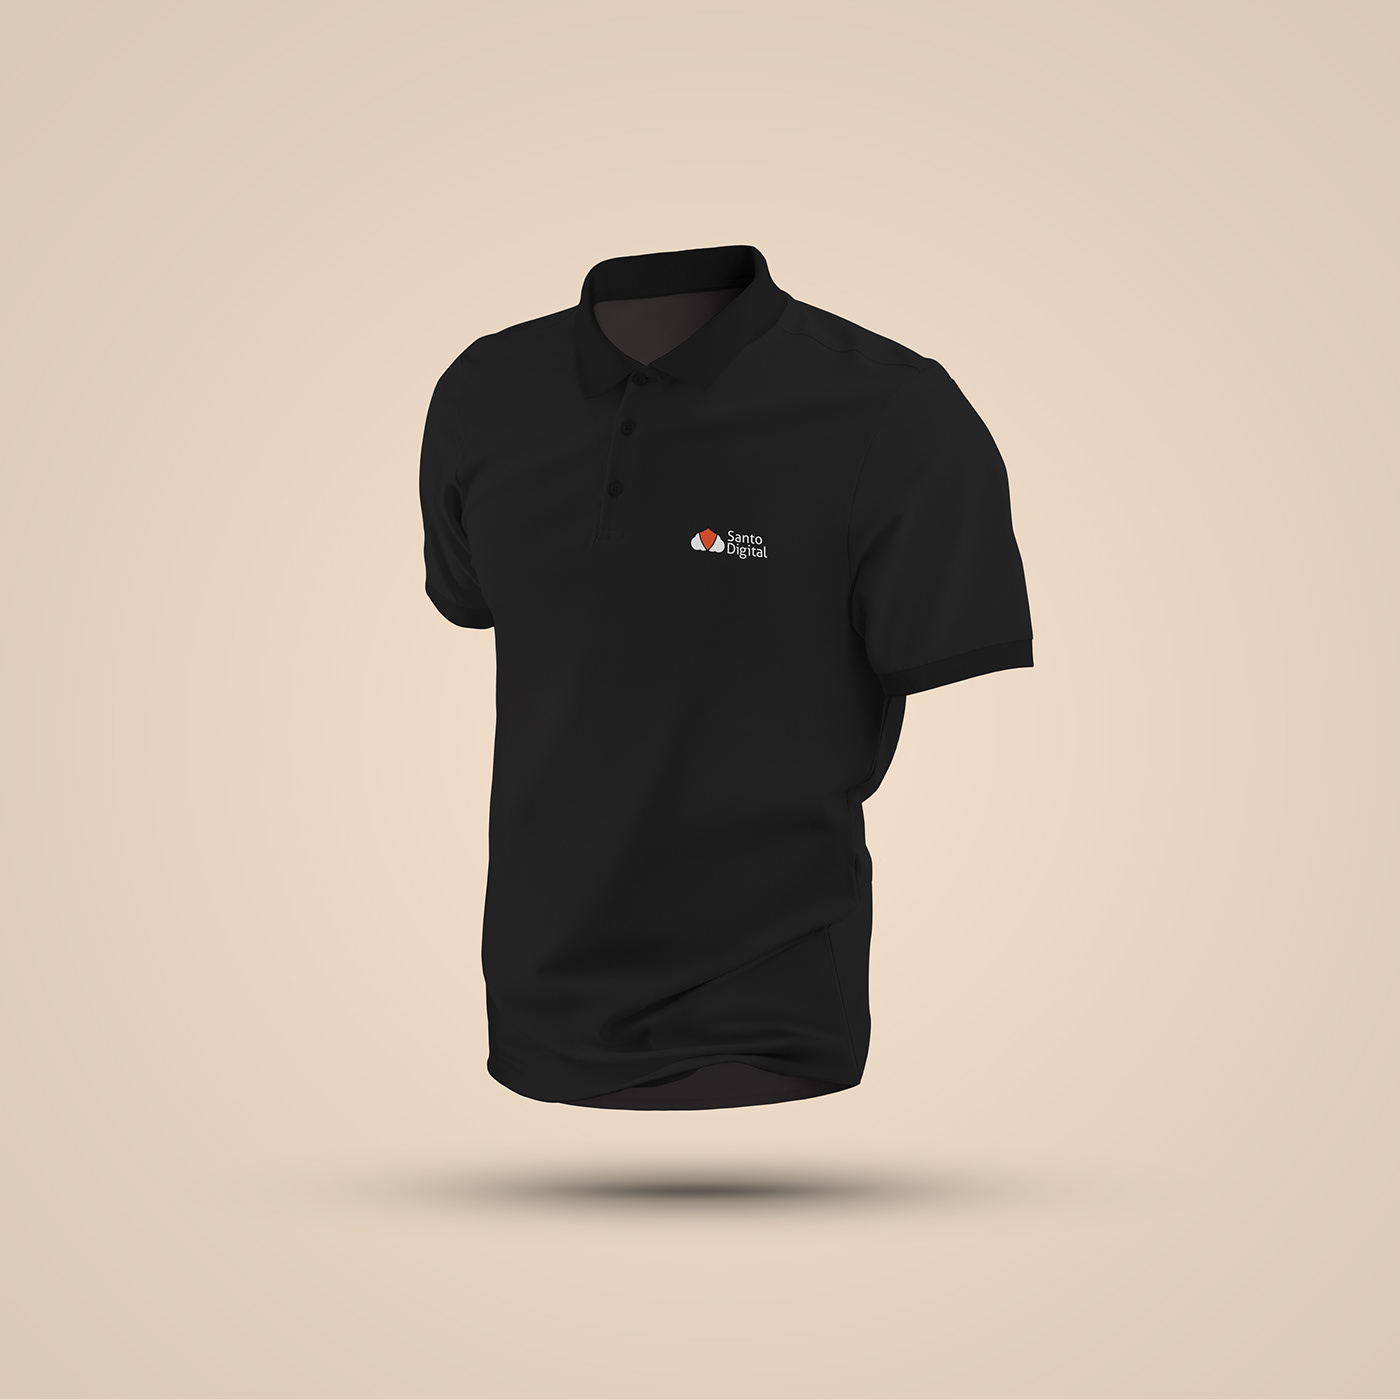 Mockup shirt Tshirt Design vector google polo t-shirt Clothing GoogleCloud santodigital